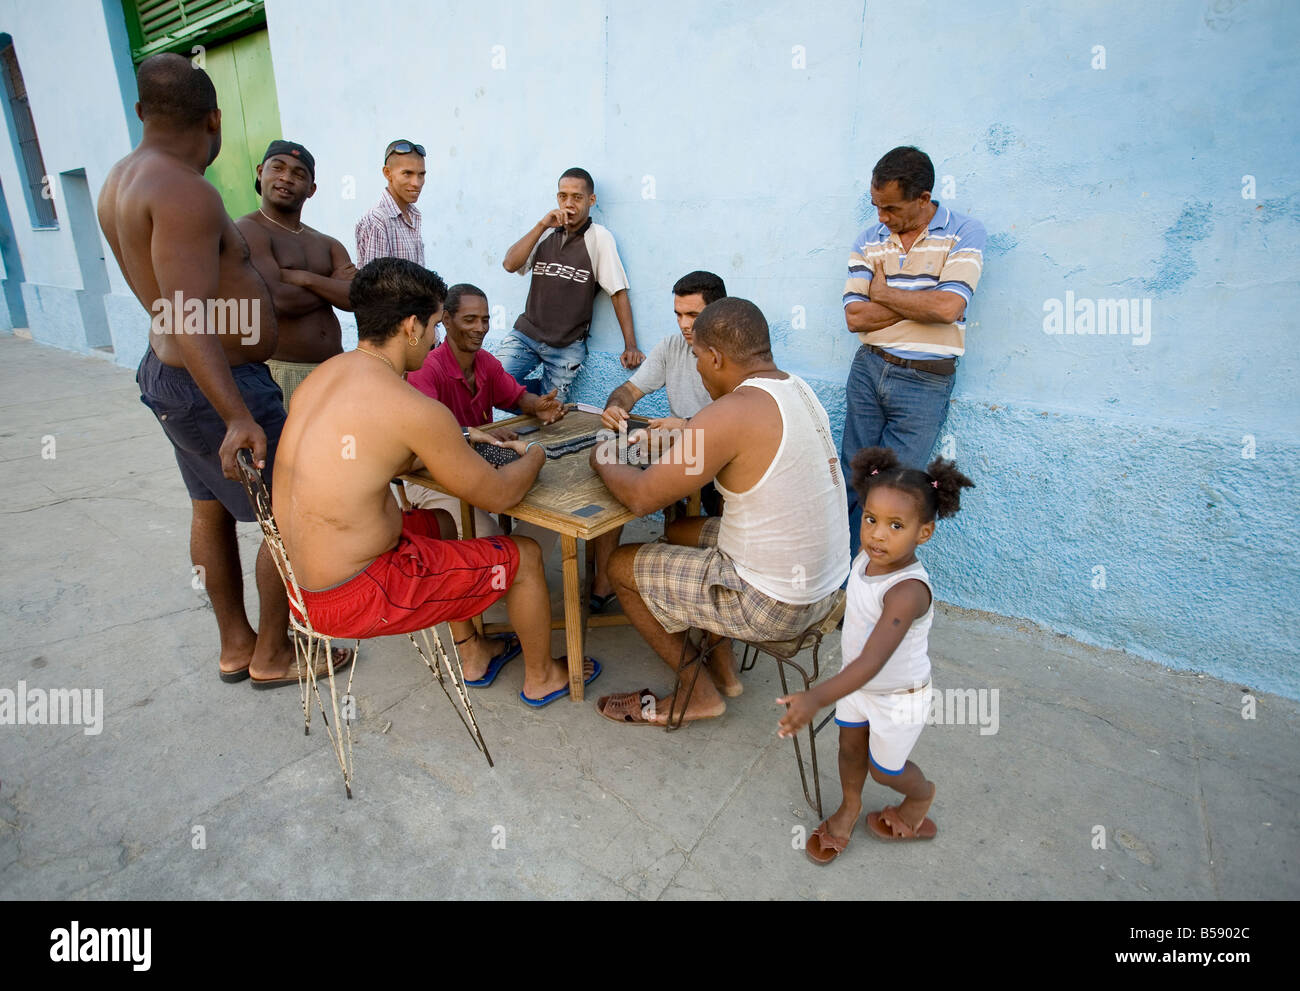 Men playing dominoes in the street, Santa Clara, Cuba Stock Photo